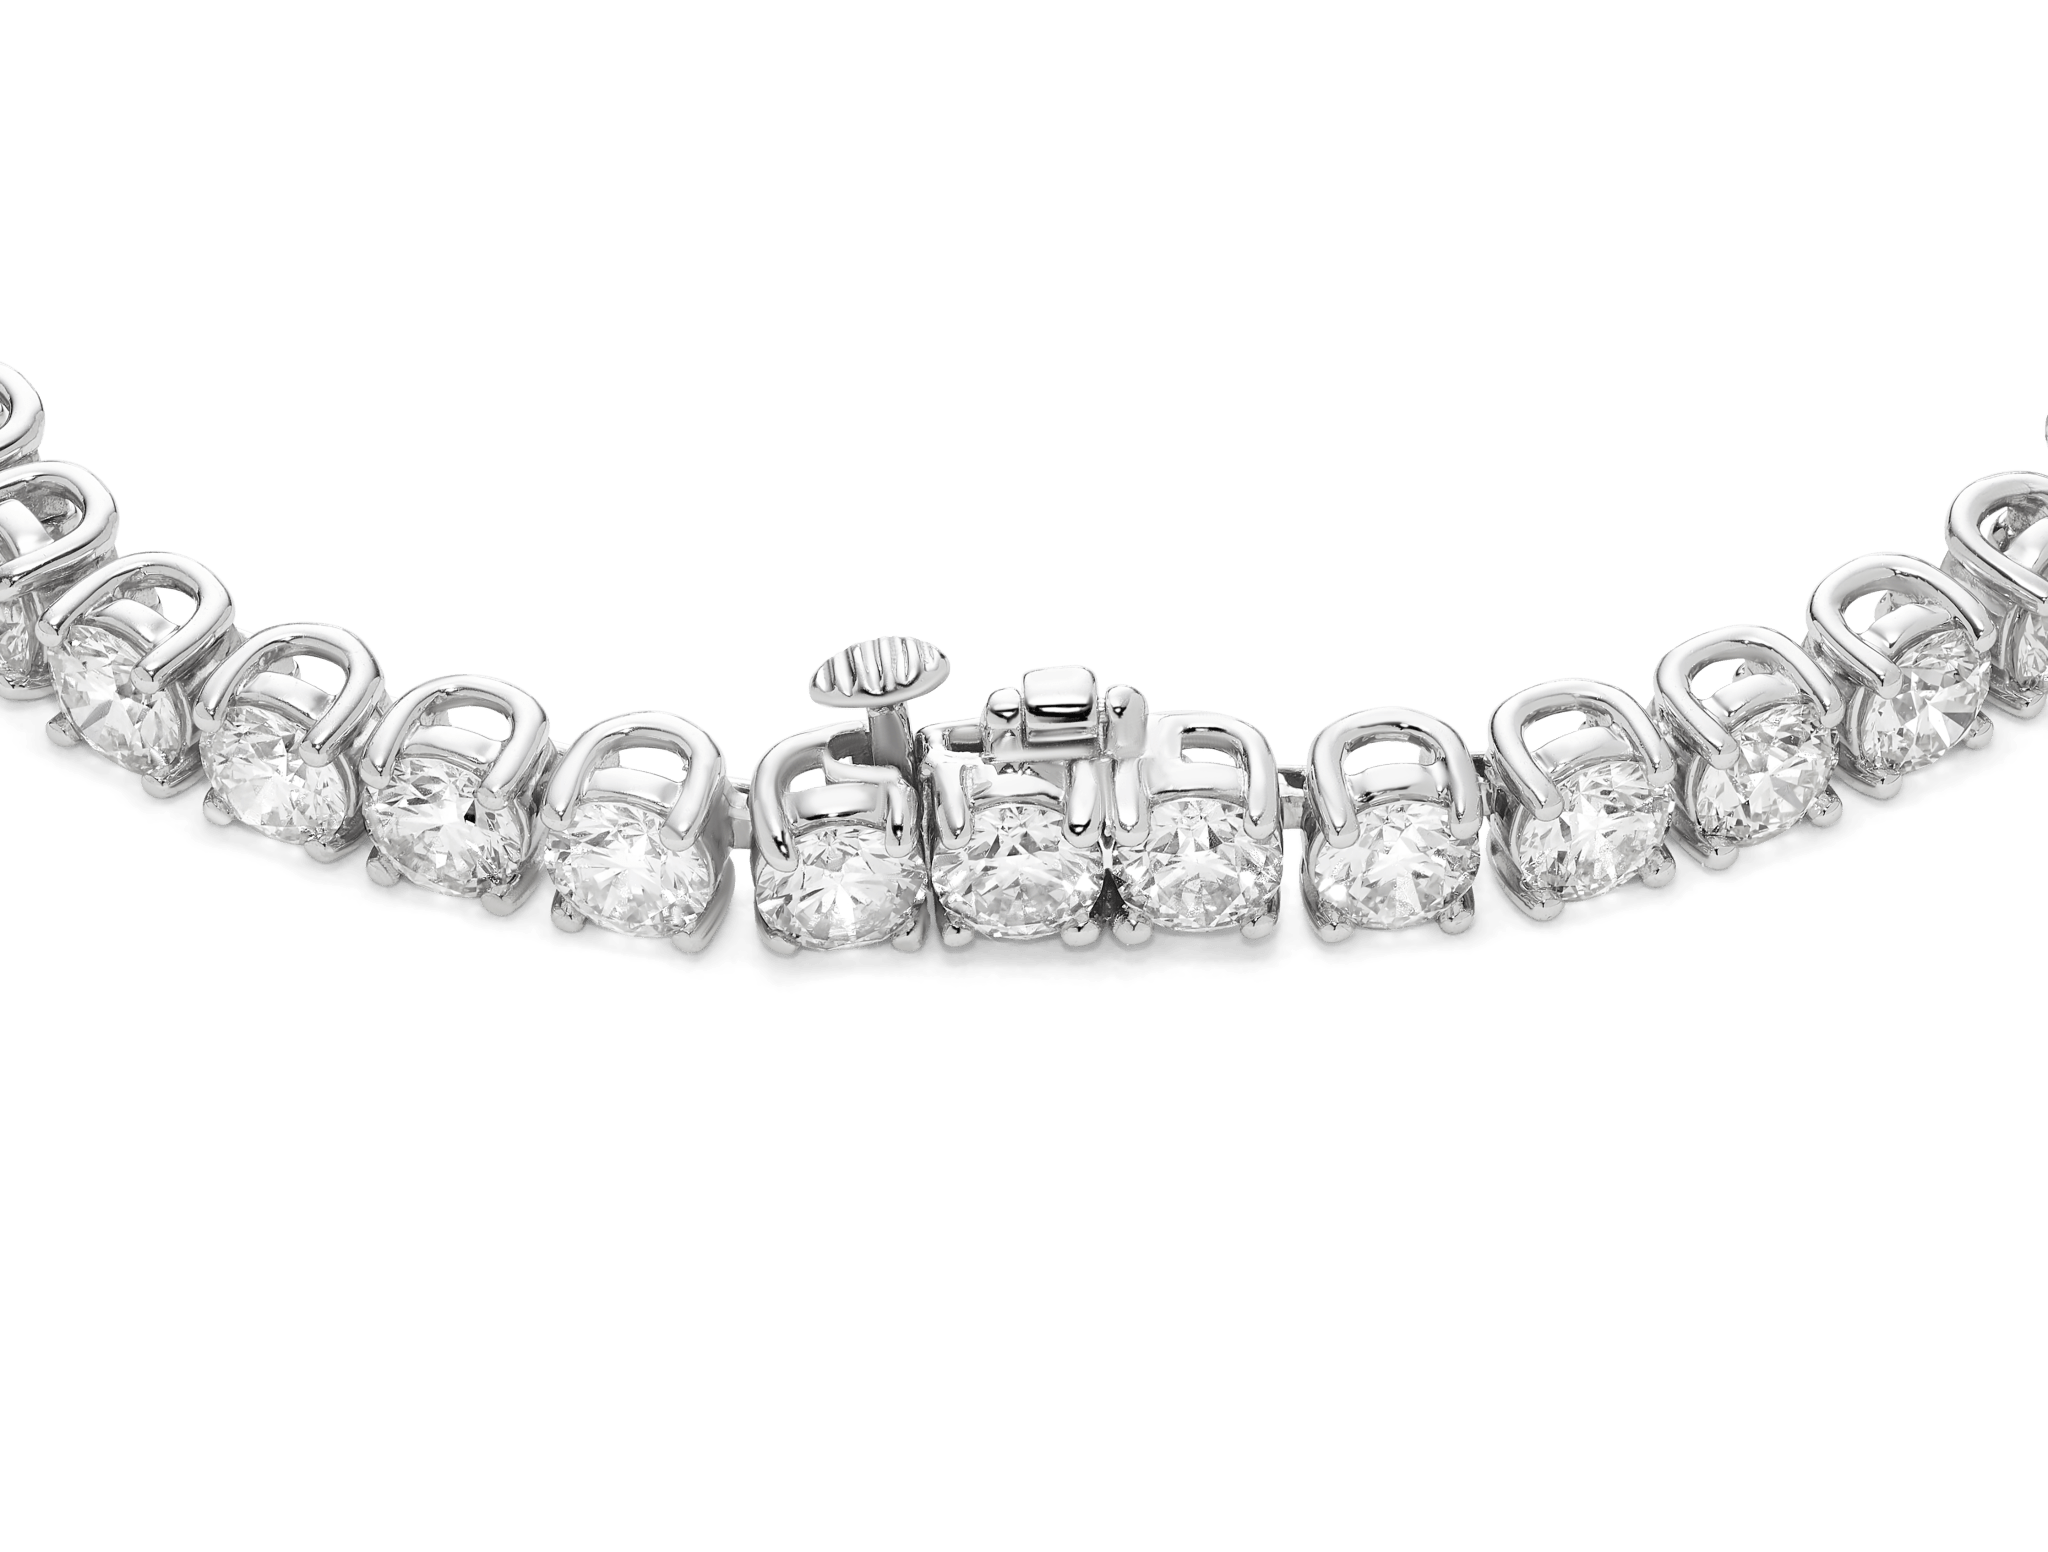 Lab-Grown Diamond Large Tennis Bracelet - E,F color, 6.5" length | White - #Lightbox Jewelry#